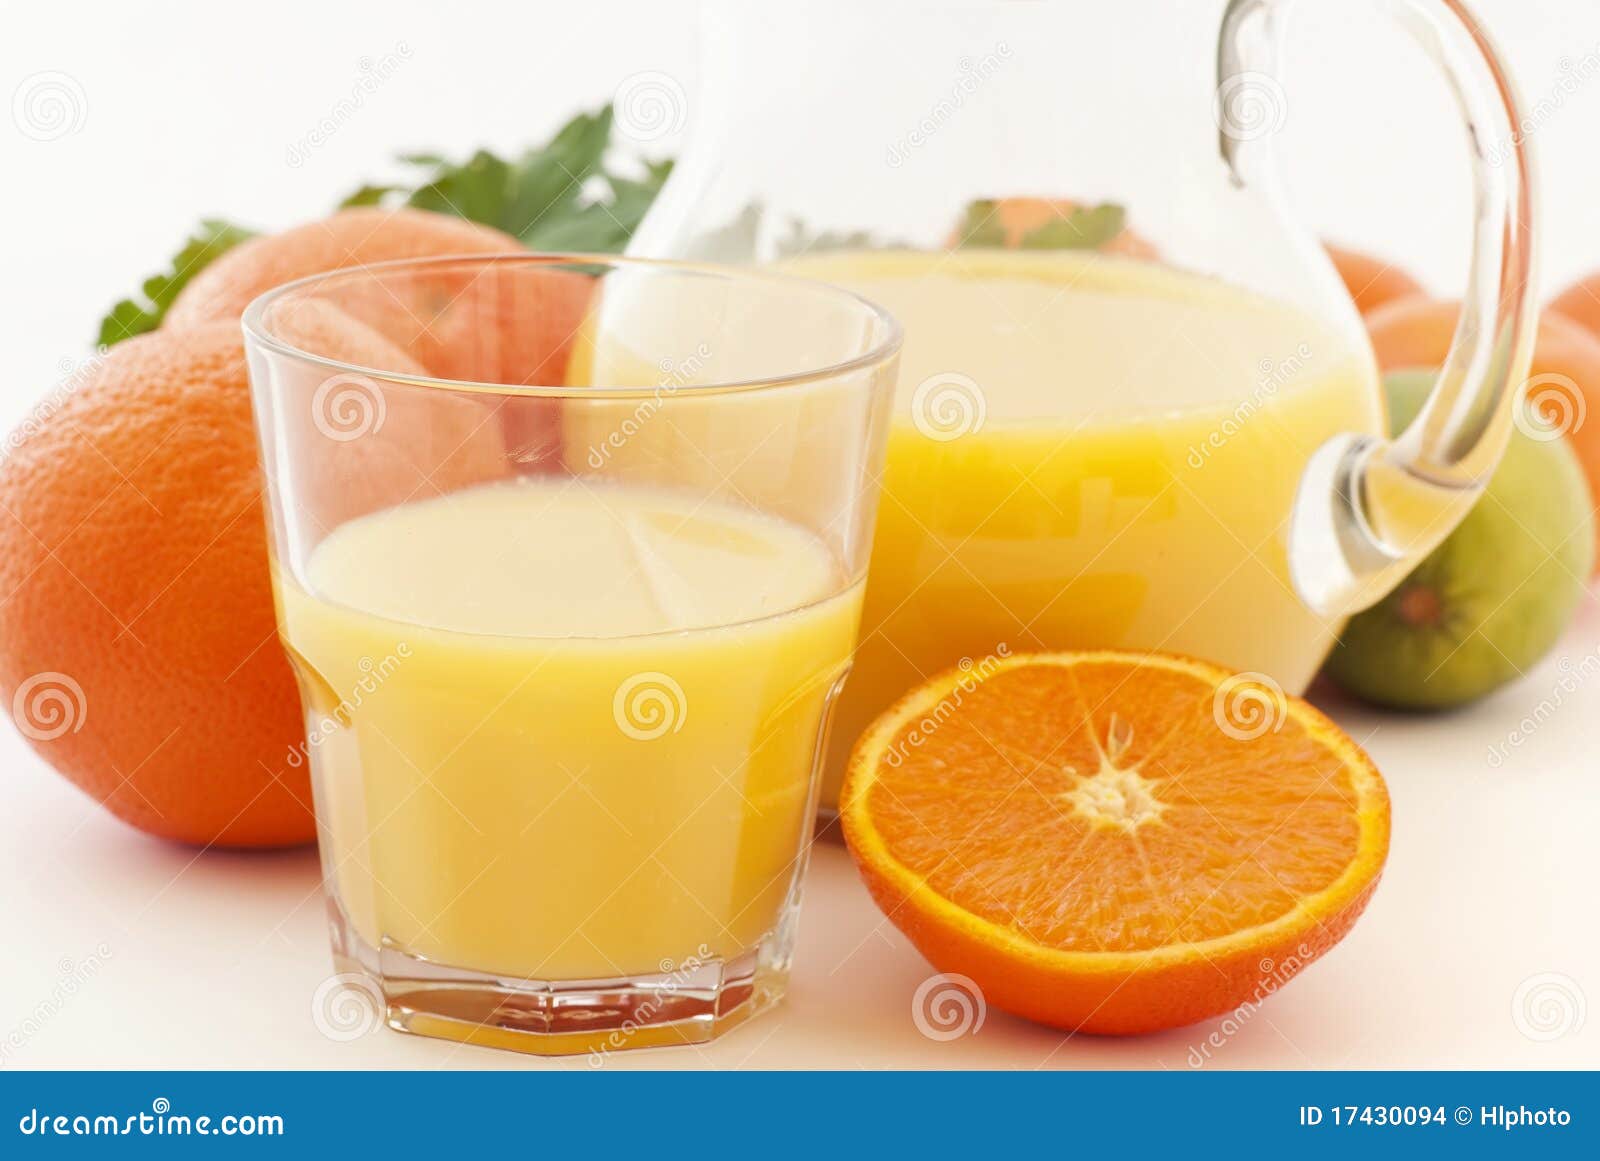 https://thumbs.dreamstime.com/z/orange-juice-pitcher-17430094.jpg